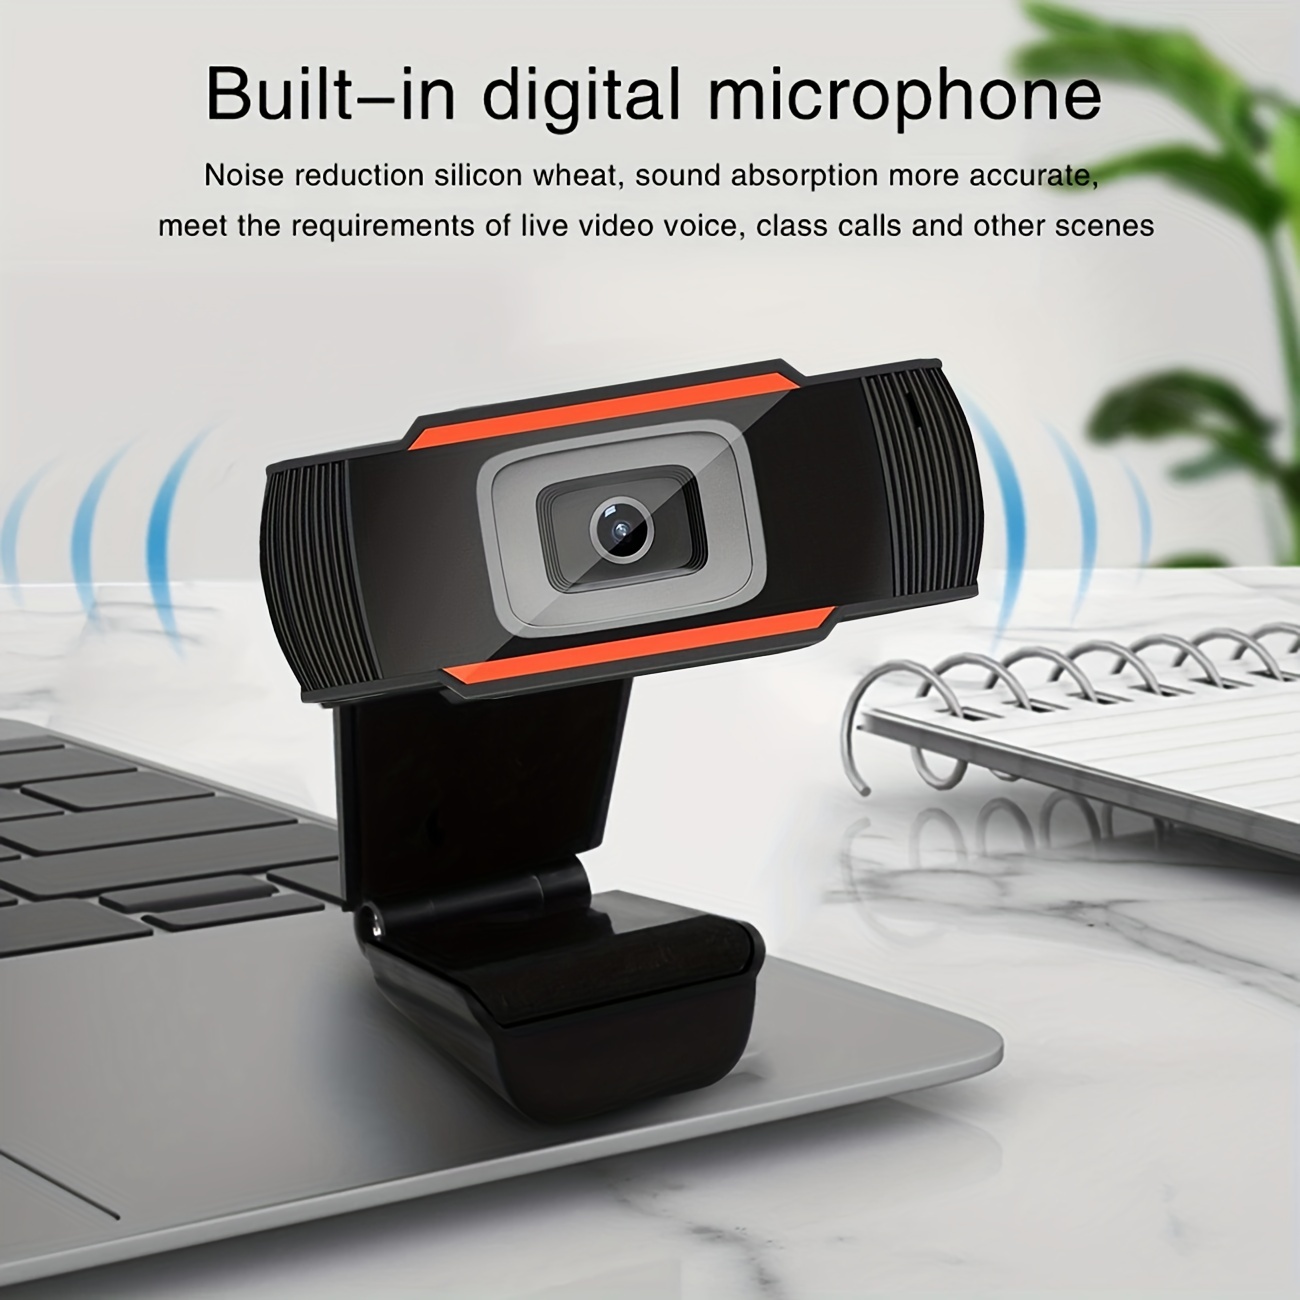 Webcam HD 1080p Web Camera, USB PC Computer Webcam with Microphone